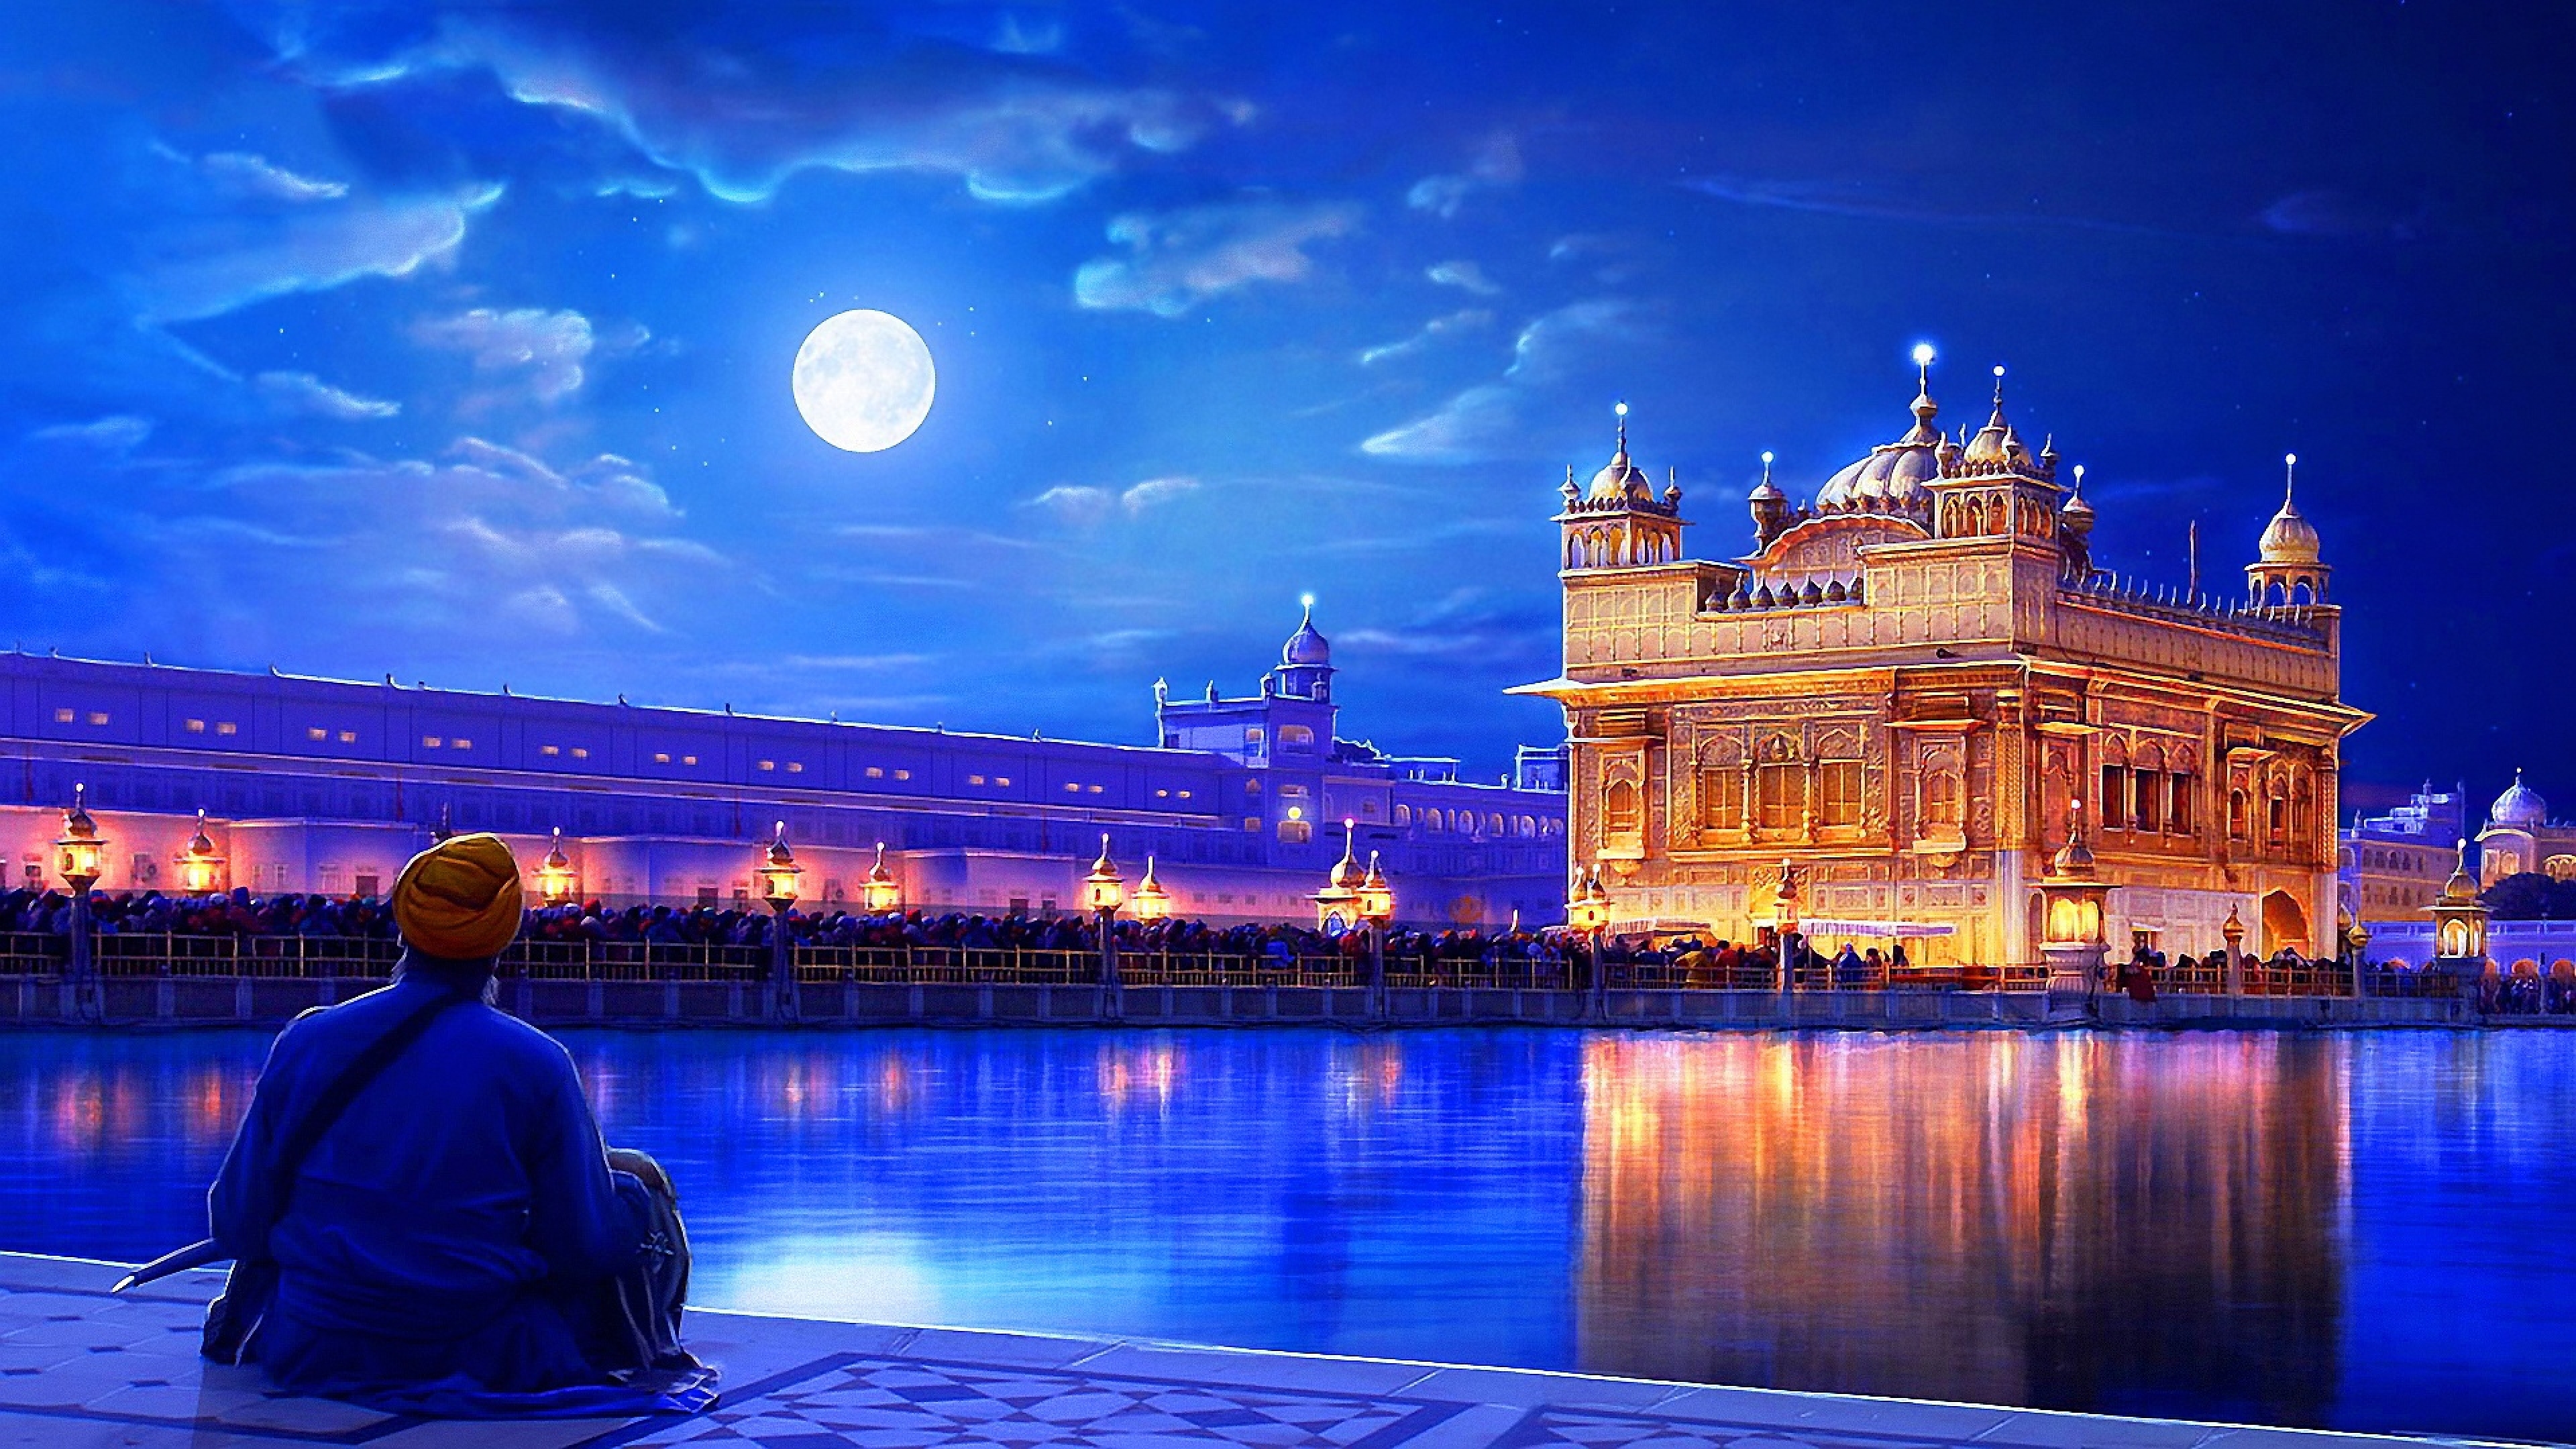 Golden Temple Amritsar India for 3840 x 2160 4K Ultra HDTV resolution